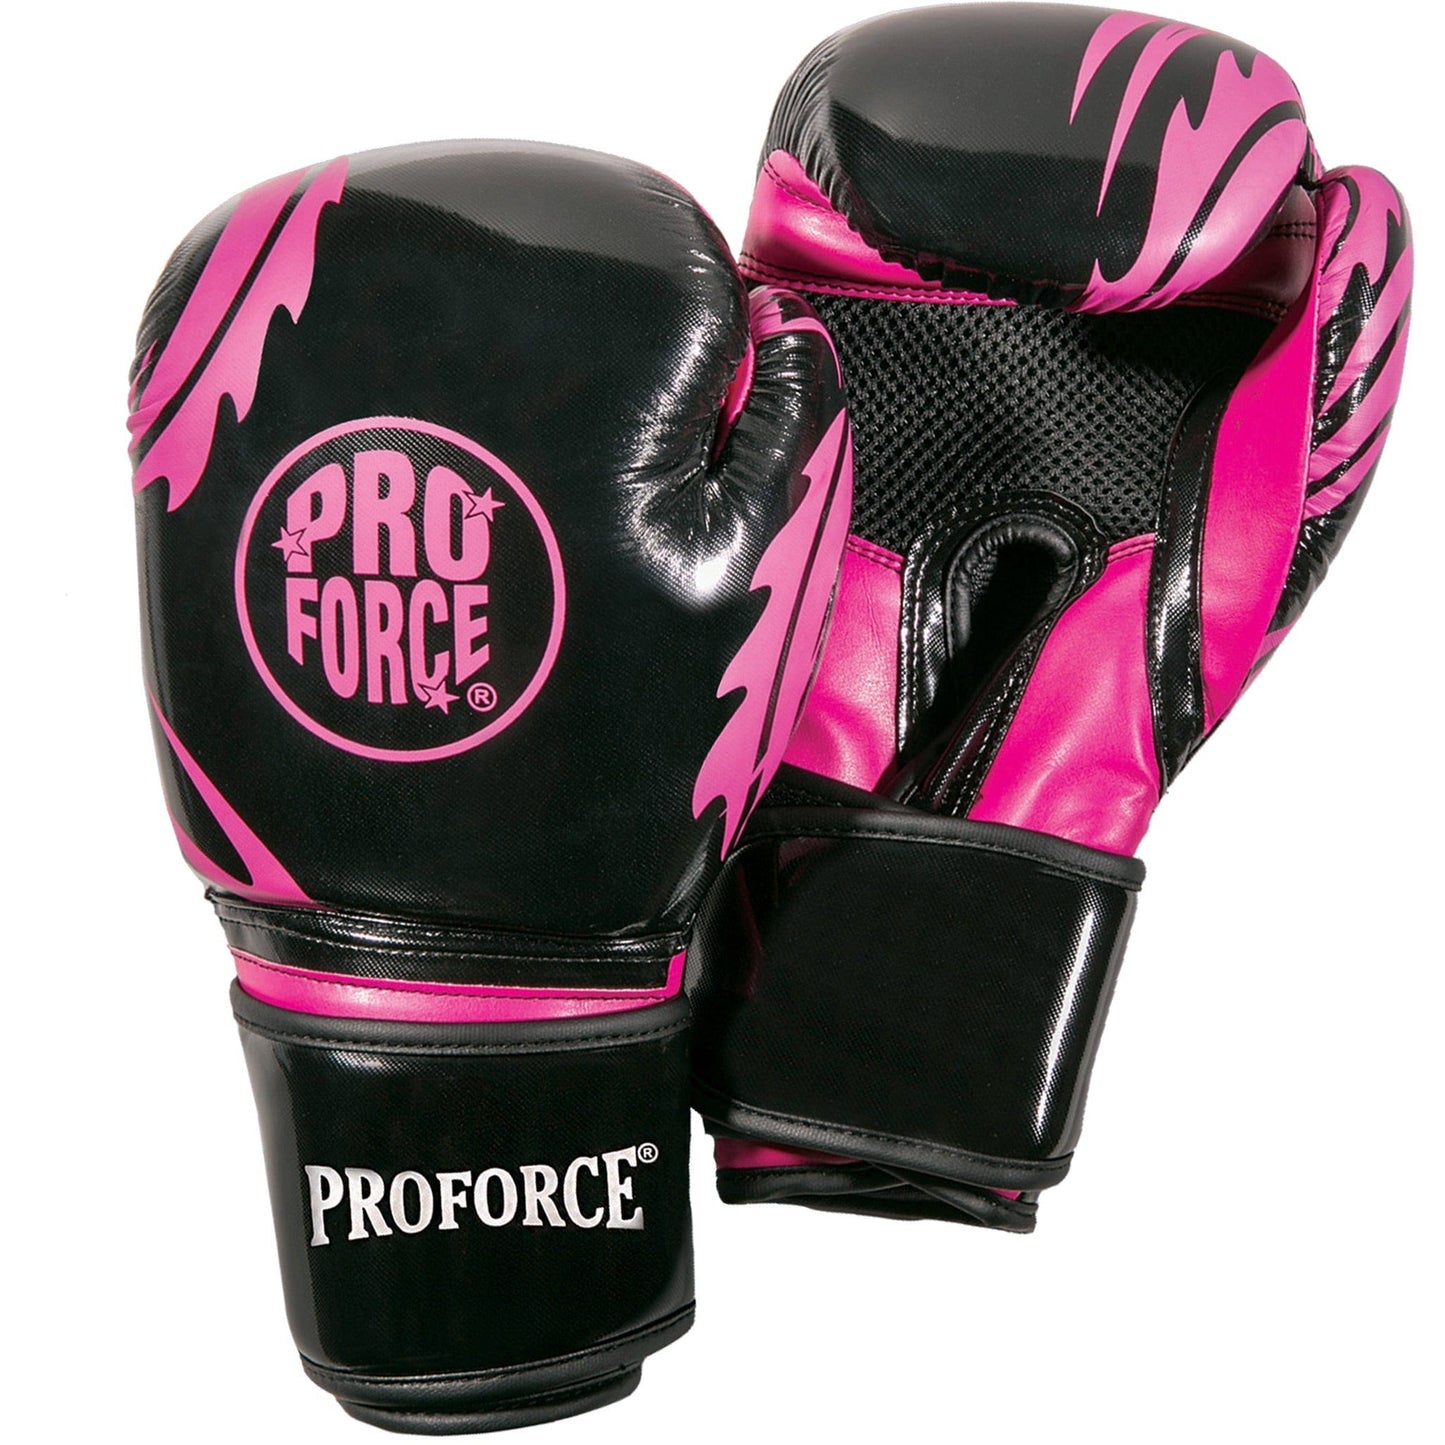 Proforce Boxing black/fuchsia ProForce Combat Boxing Training Glove - 12 oz